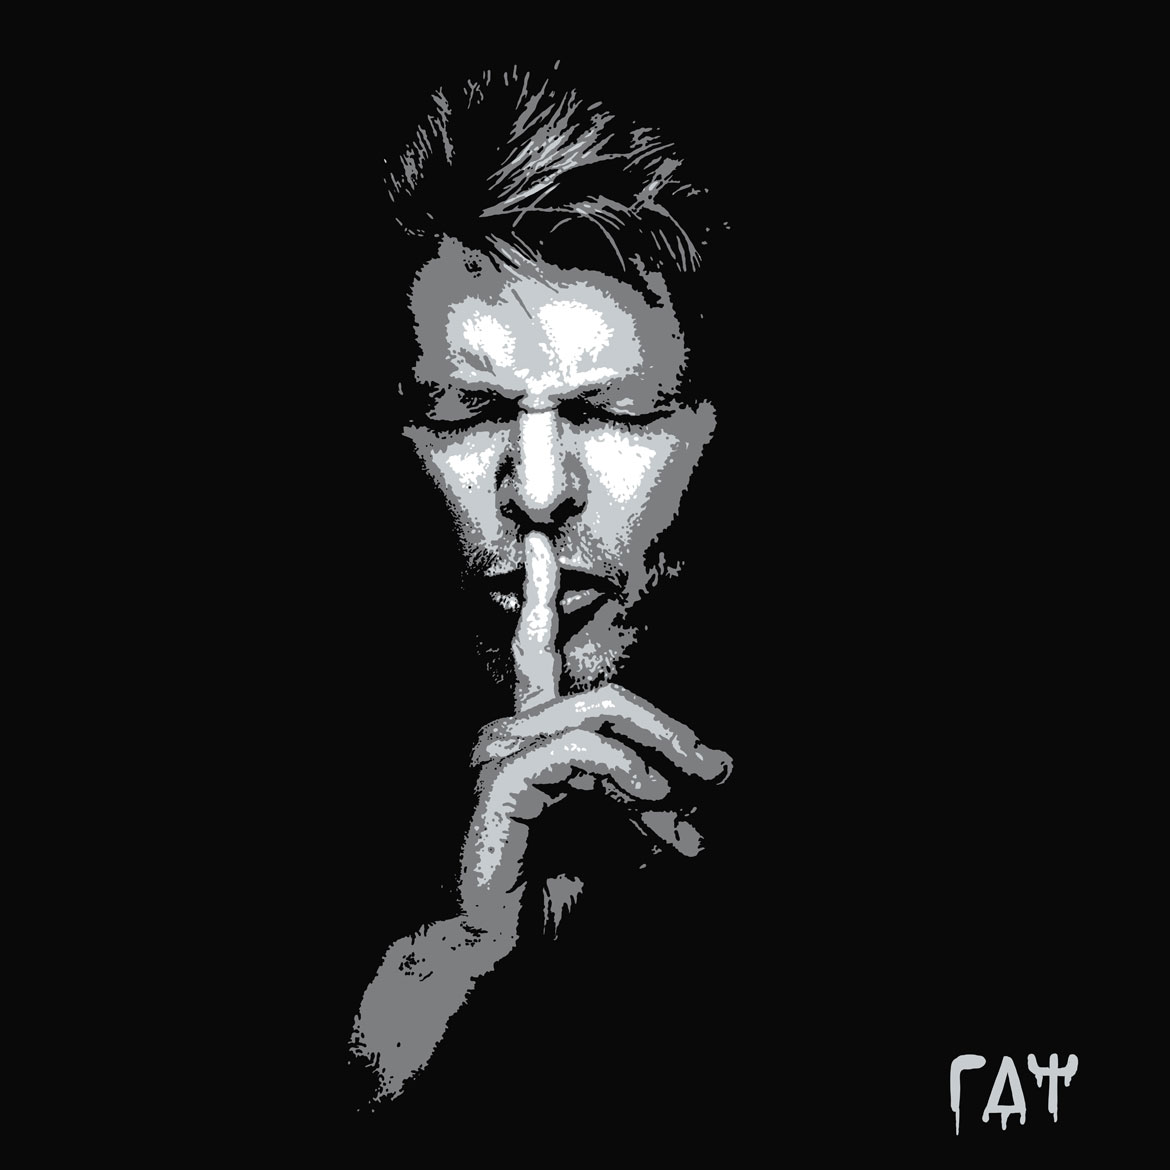 David Bowie Lazarus